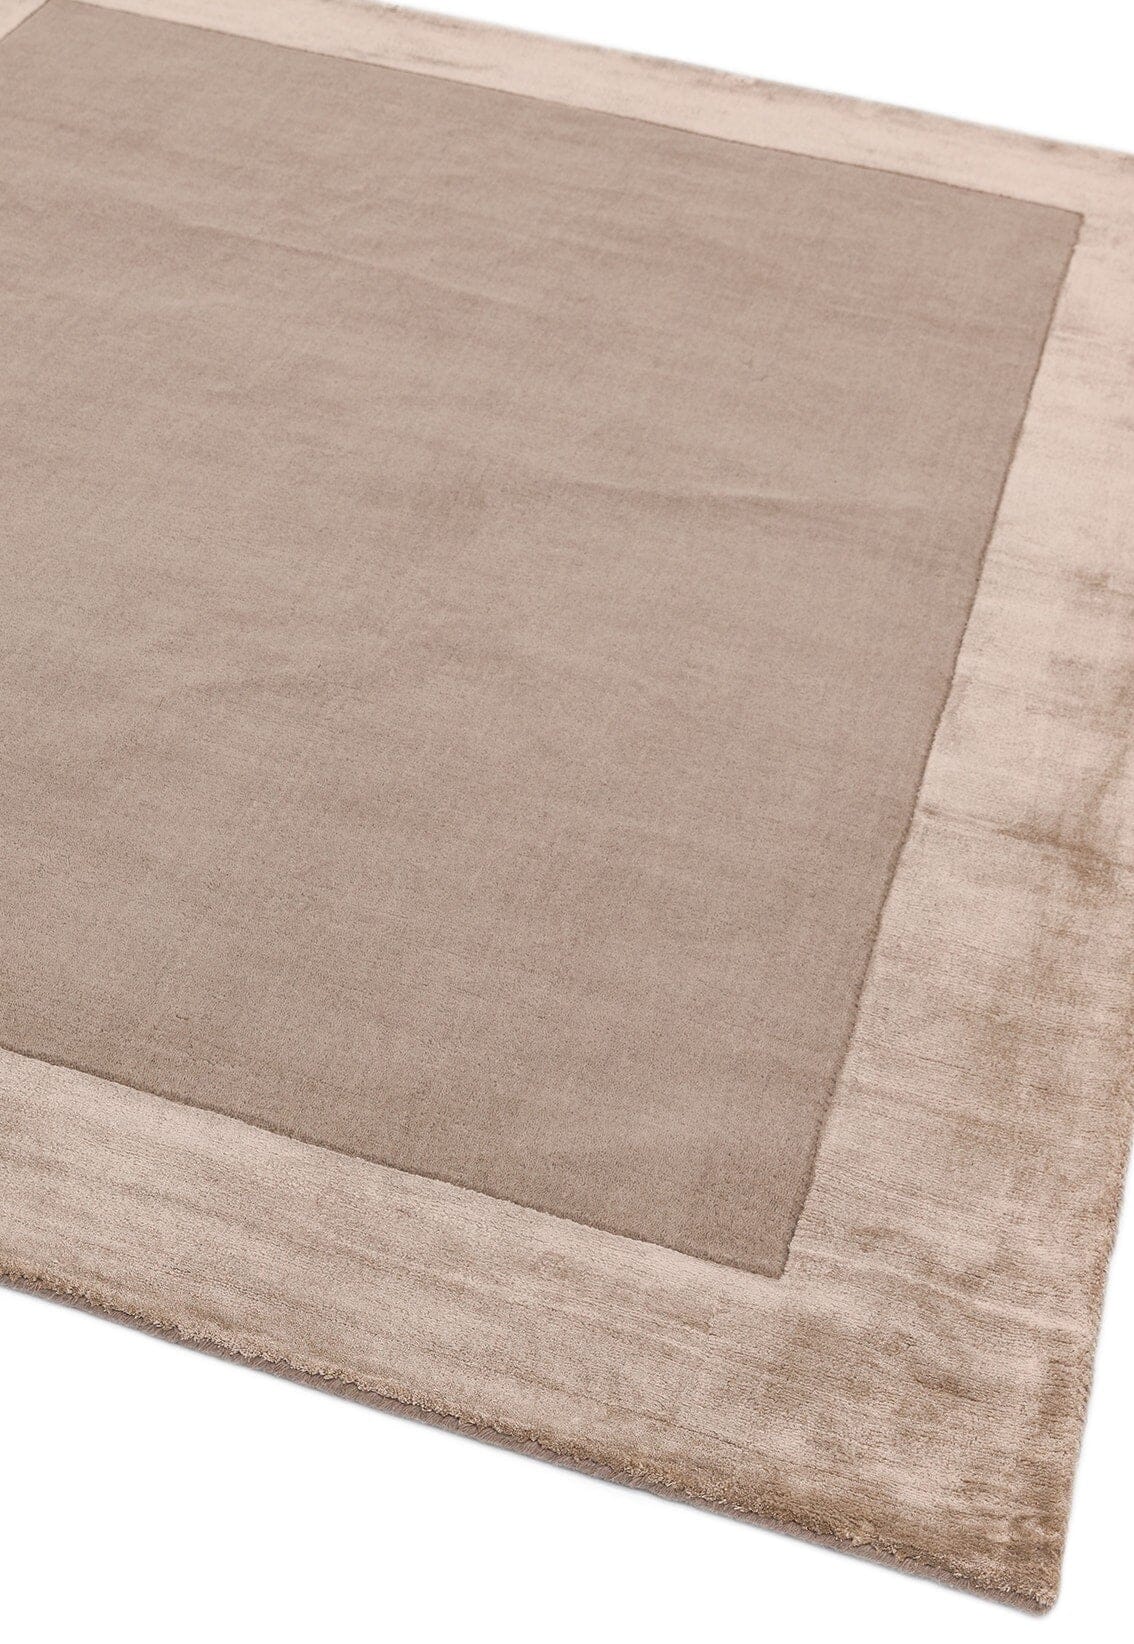  Asiatic Carpets-Asiatic Carpets Ascot Hand Woven Rug Sand - 200 x 290cm-Beige, Natural 757 